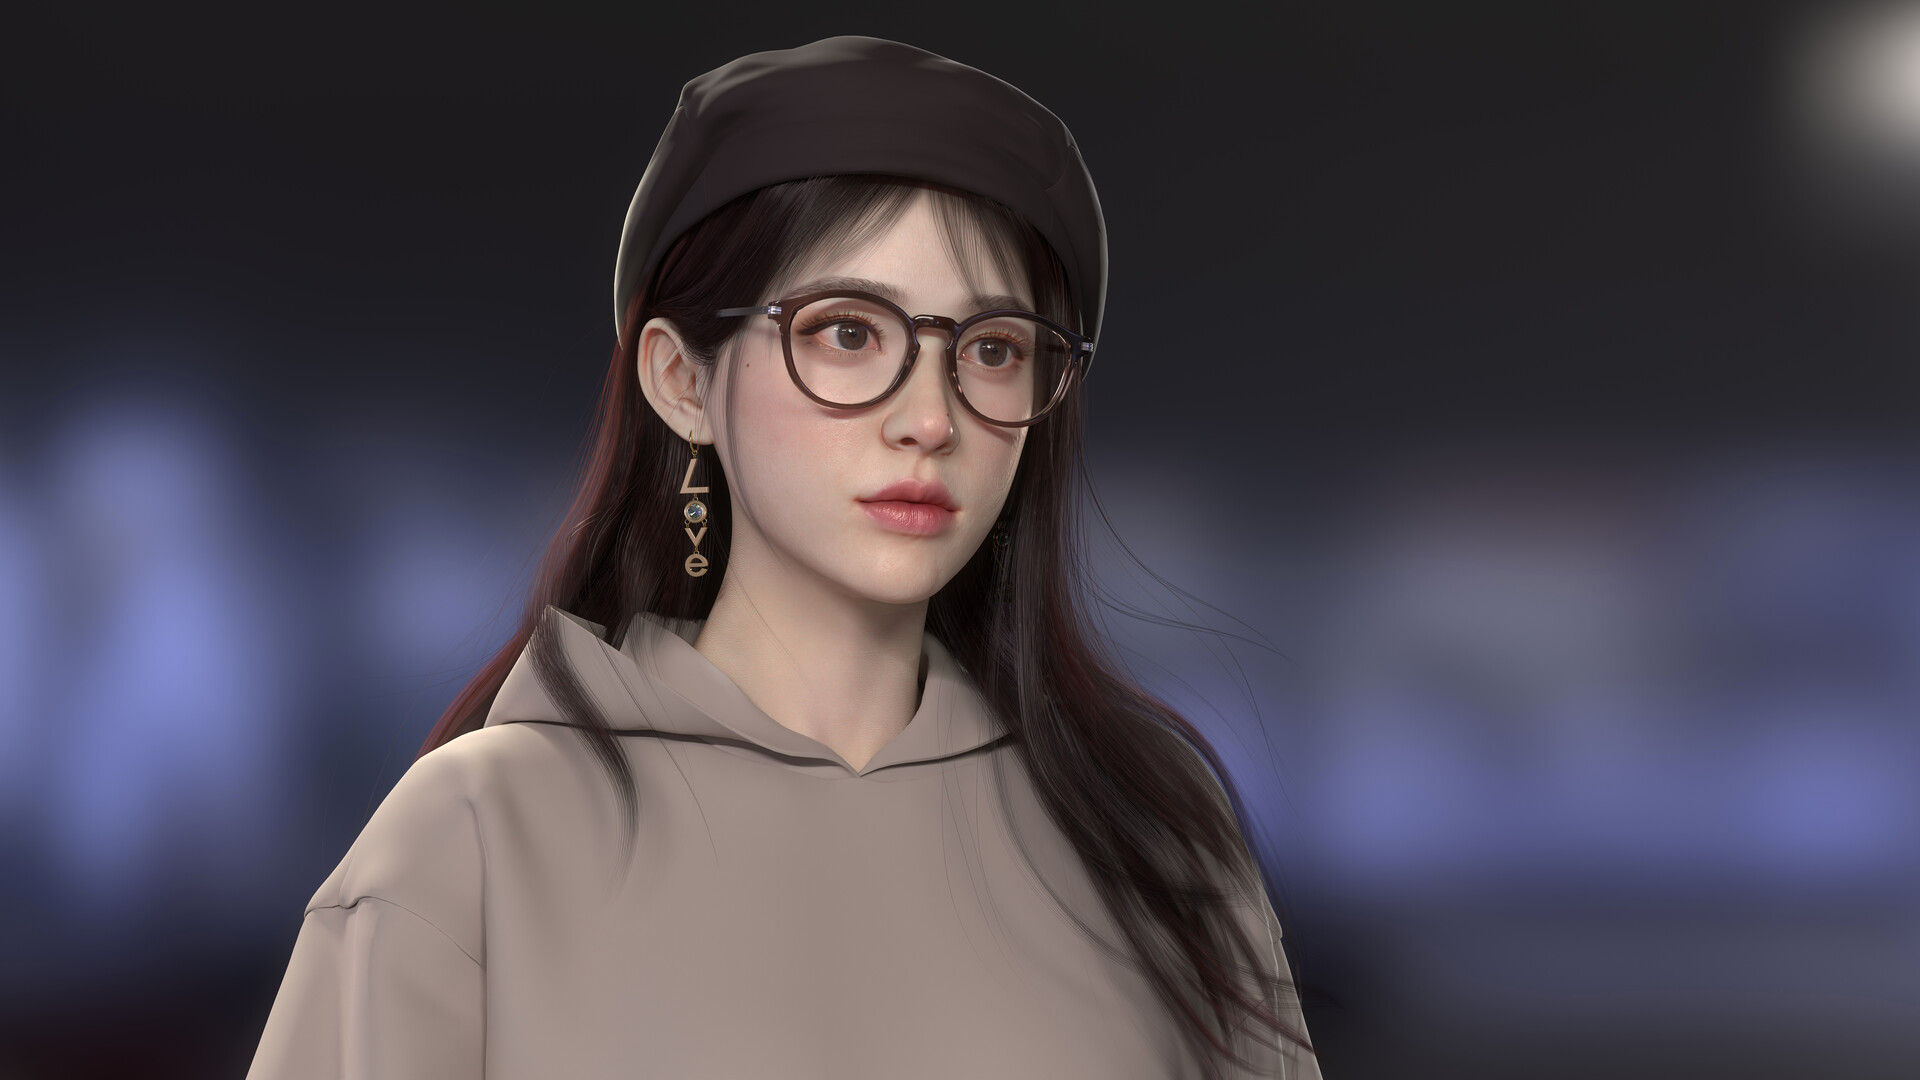 Artwork Digital Art 3D CGi Women Glasses Women With Glasses Long Hair Hat 1920x1080